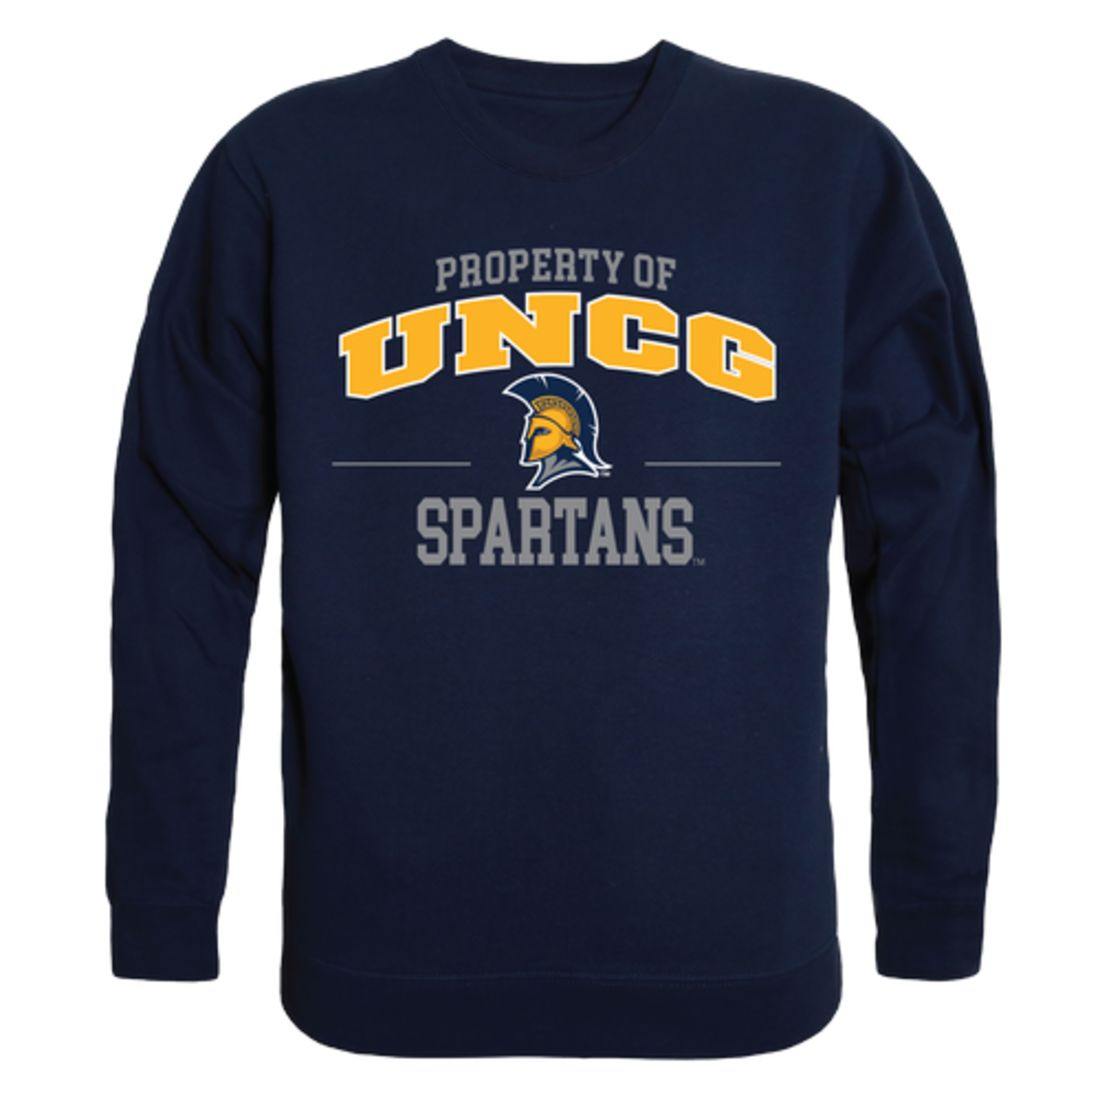 UNCG University of North Carolina at Greensboro Spartans Property Crewneck Pullover Sweatshirt Sweater Navy-Campus-Wardrobe